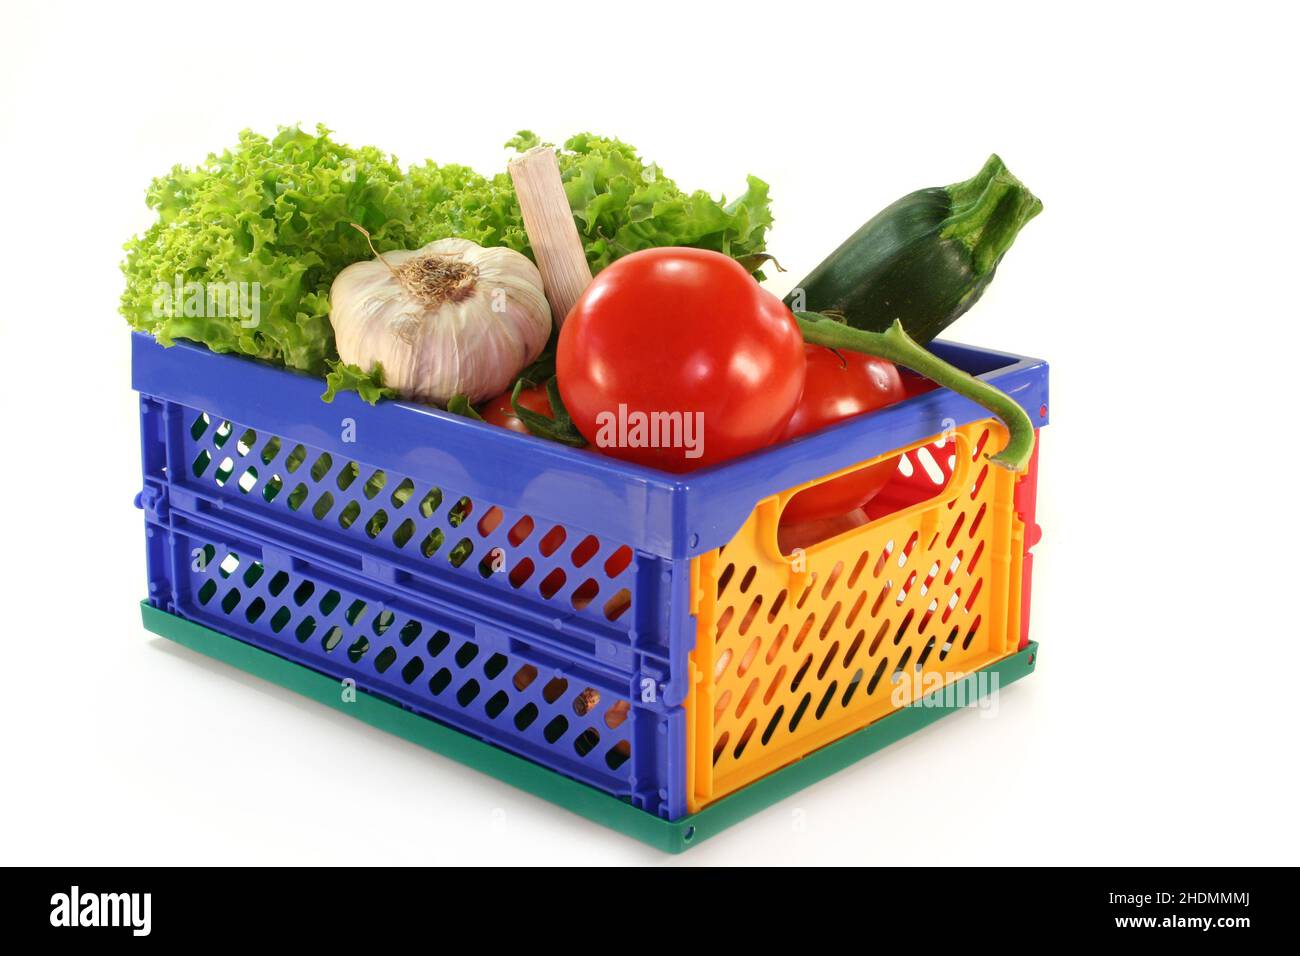 achat et shopping, légumes, boîte à charnière, achat et shopping, légumes Banque D'Images